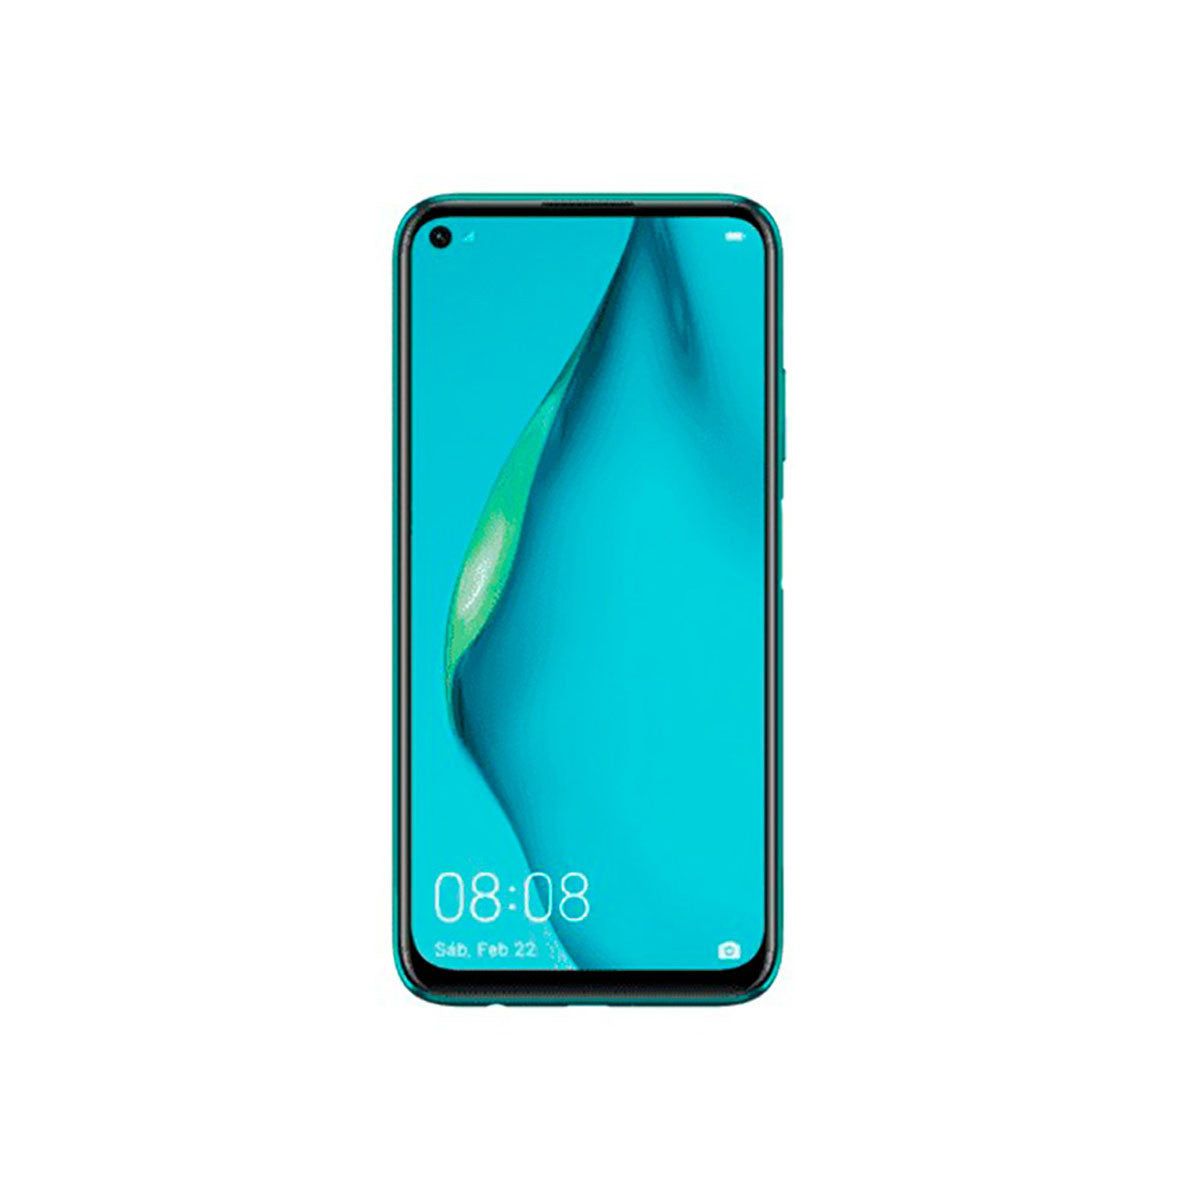 Huawei P40 Lite 6GB/128GB Verde (Crush Green) Dual SIM Smartphone | Huawei